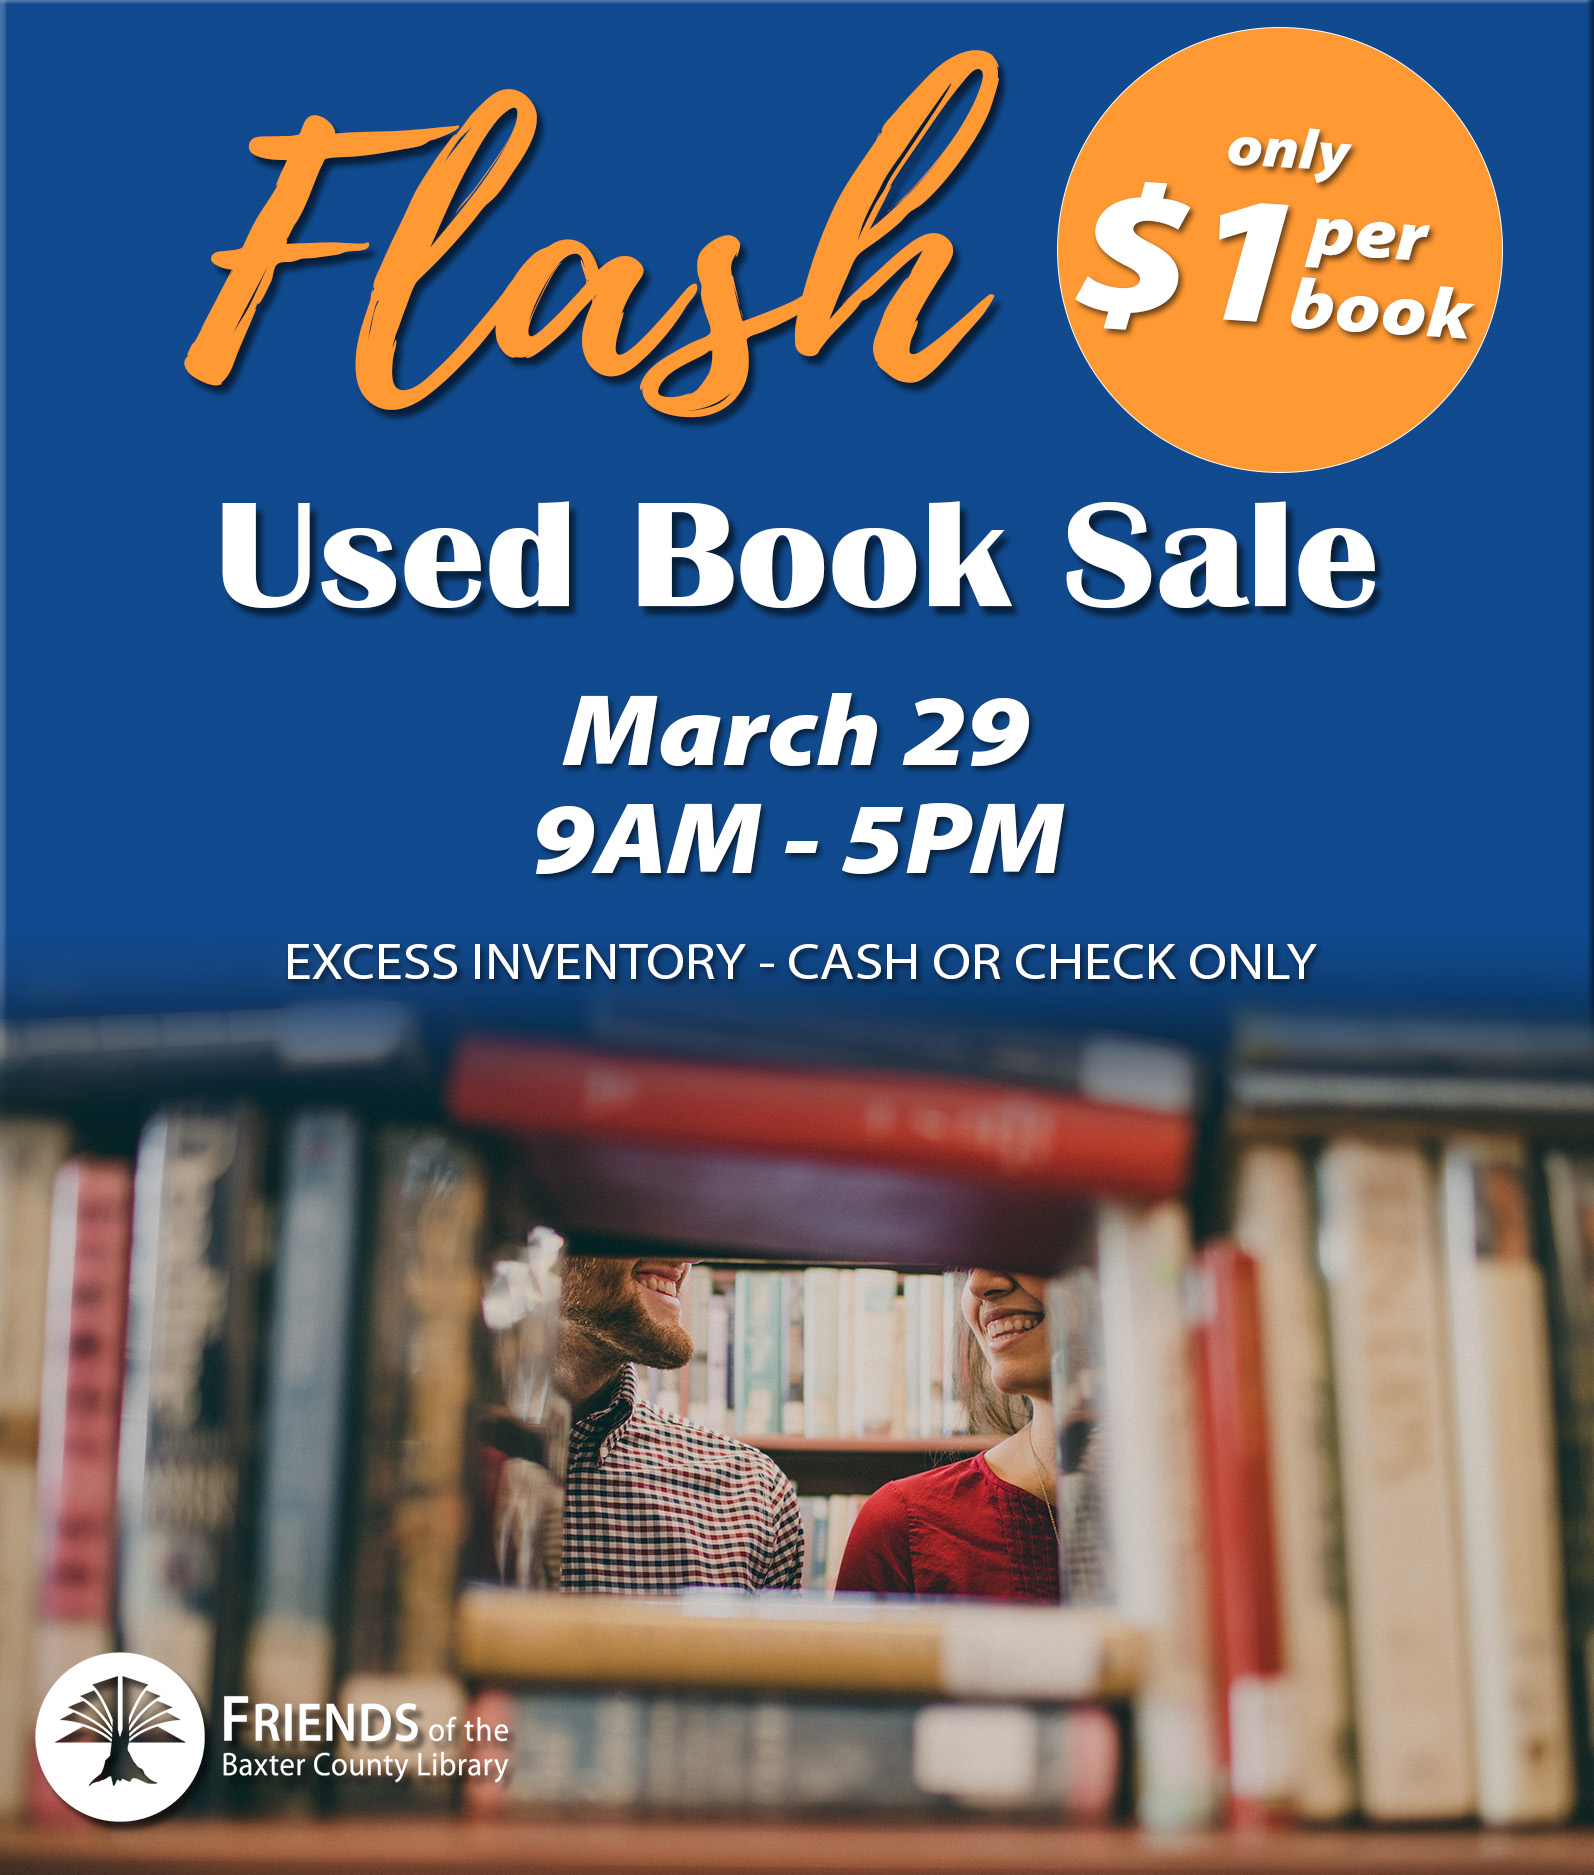 Flash Book Sale - All books $1